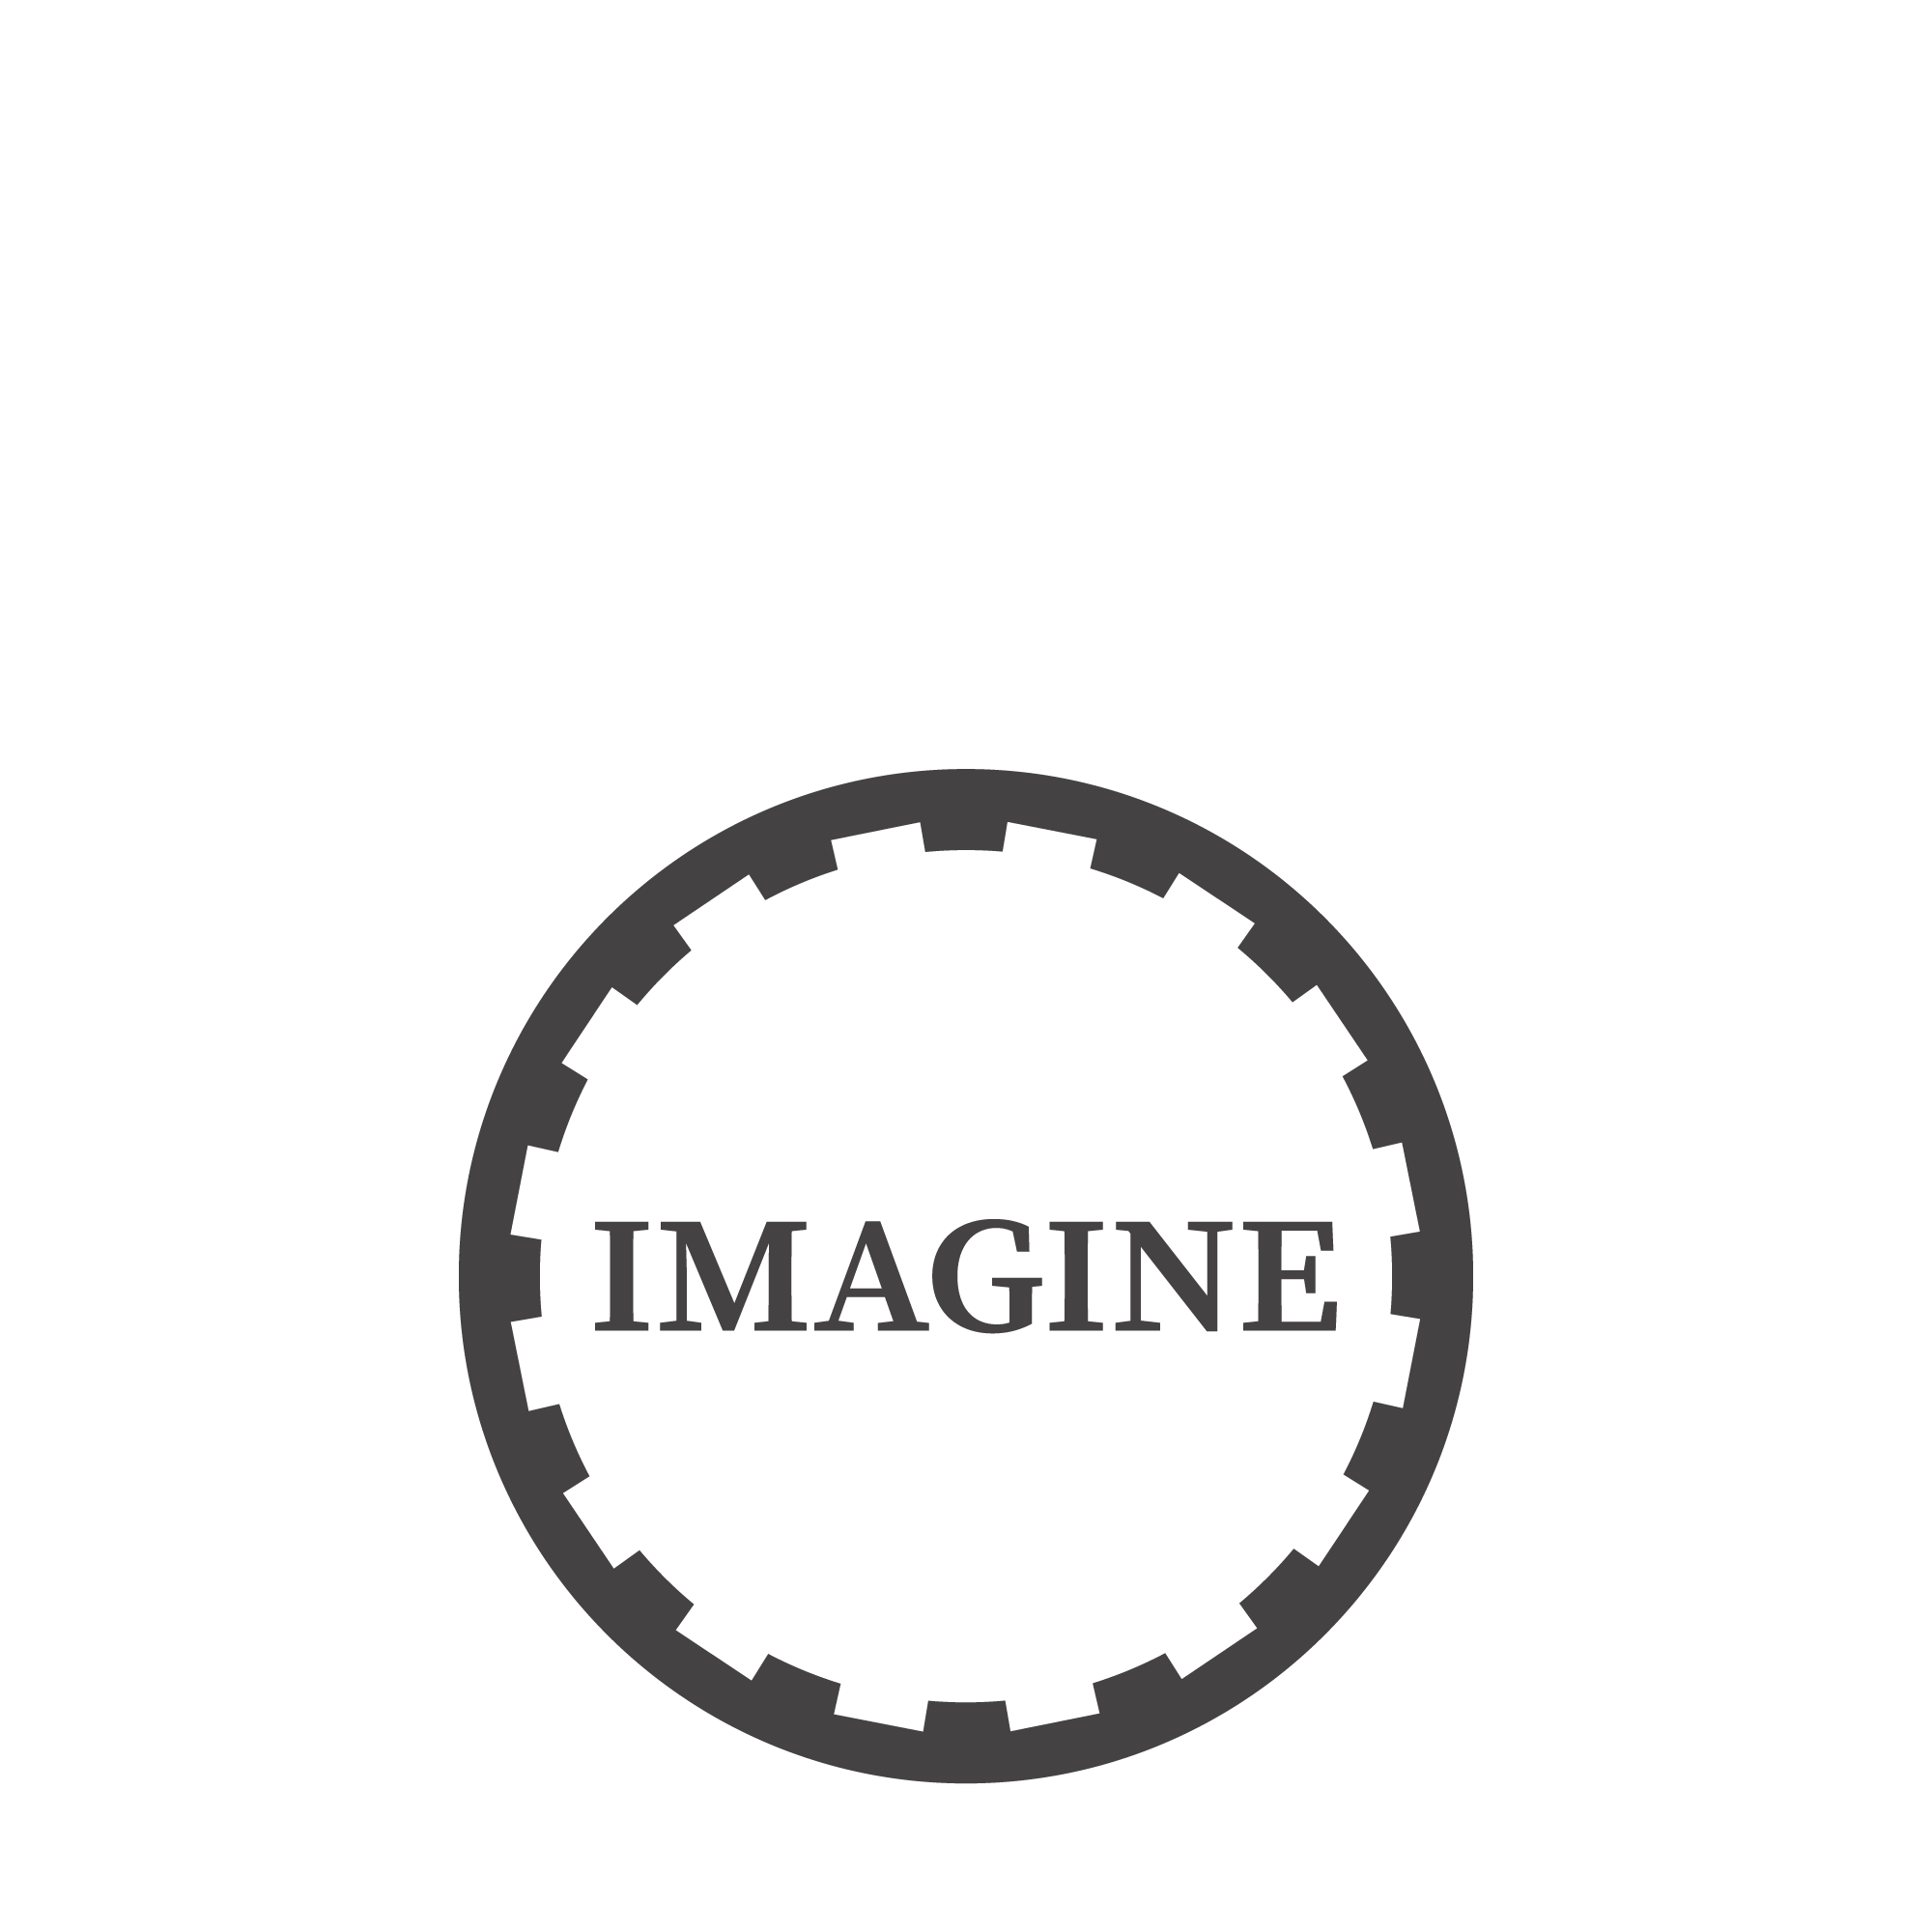 Alquiler Casa Carilo Imagine Logo